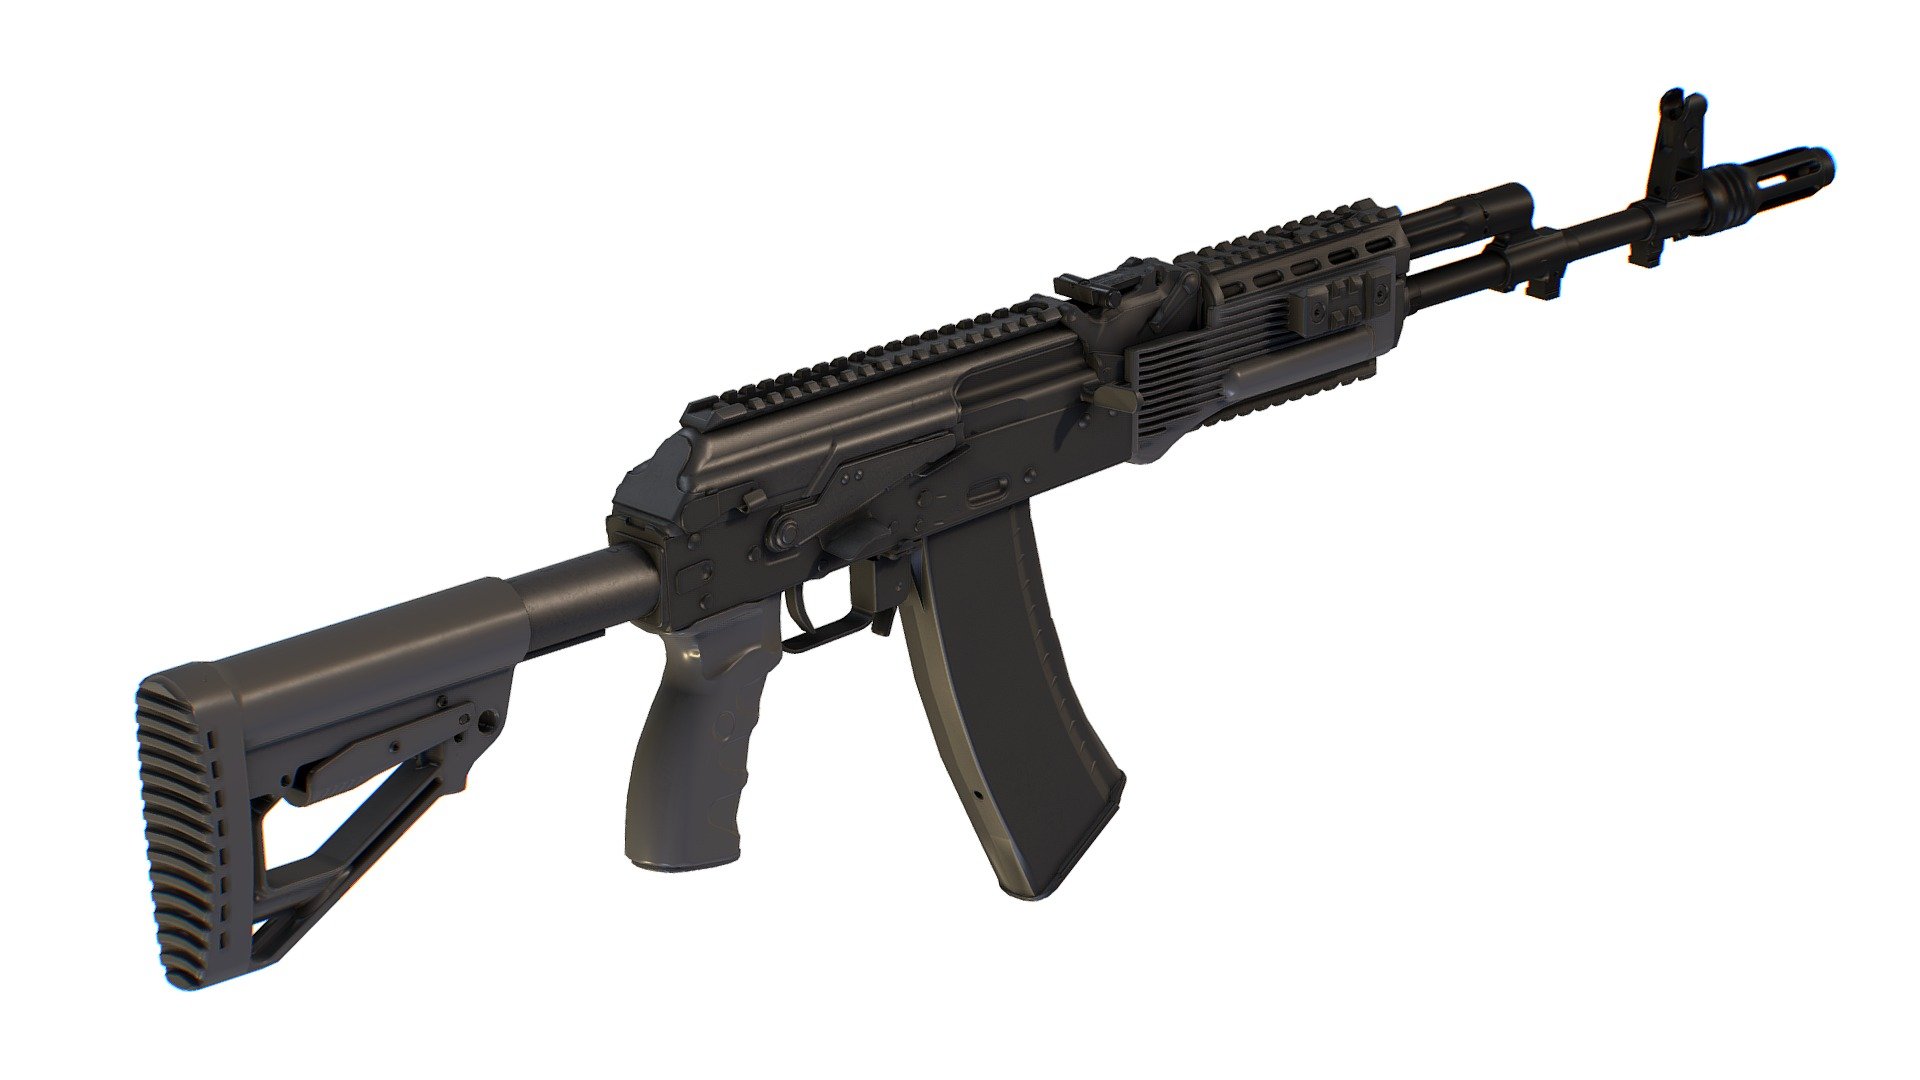 Support me on Patreon, please - https://www.patreon.com/art_book

Kalashnikov Assault Rifle AK-300 Gun AKs AKM LowPoly model - 4096x4096 textures, 3dsMaya file included 3d model